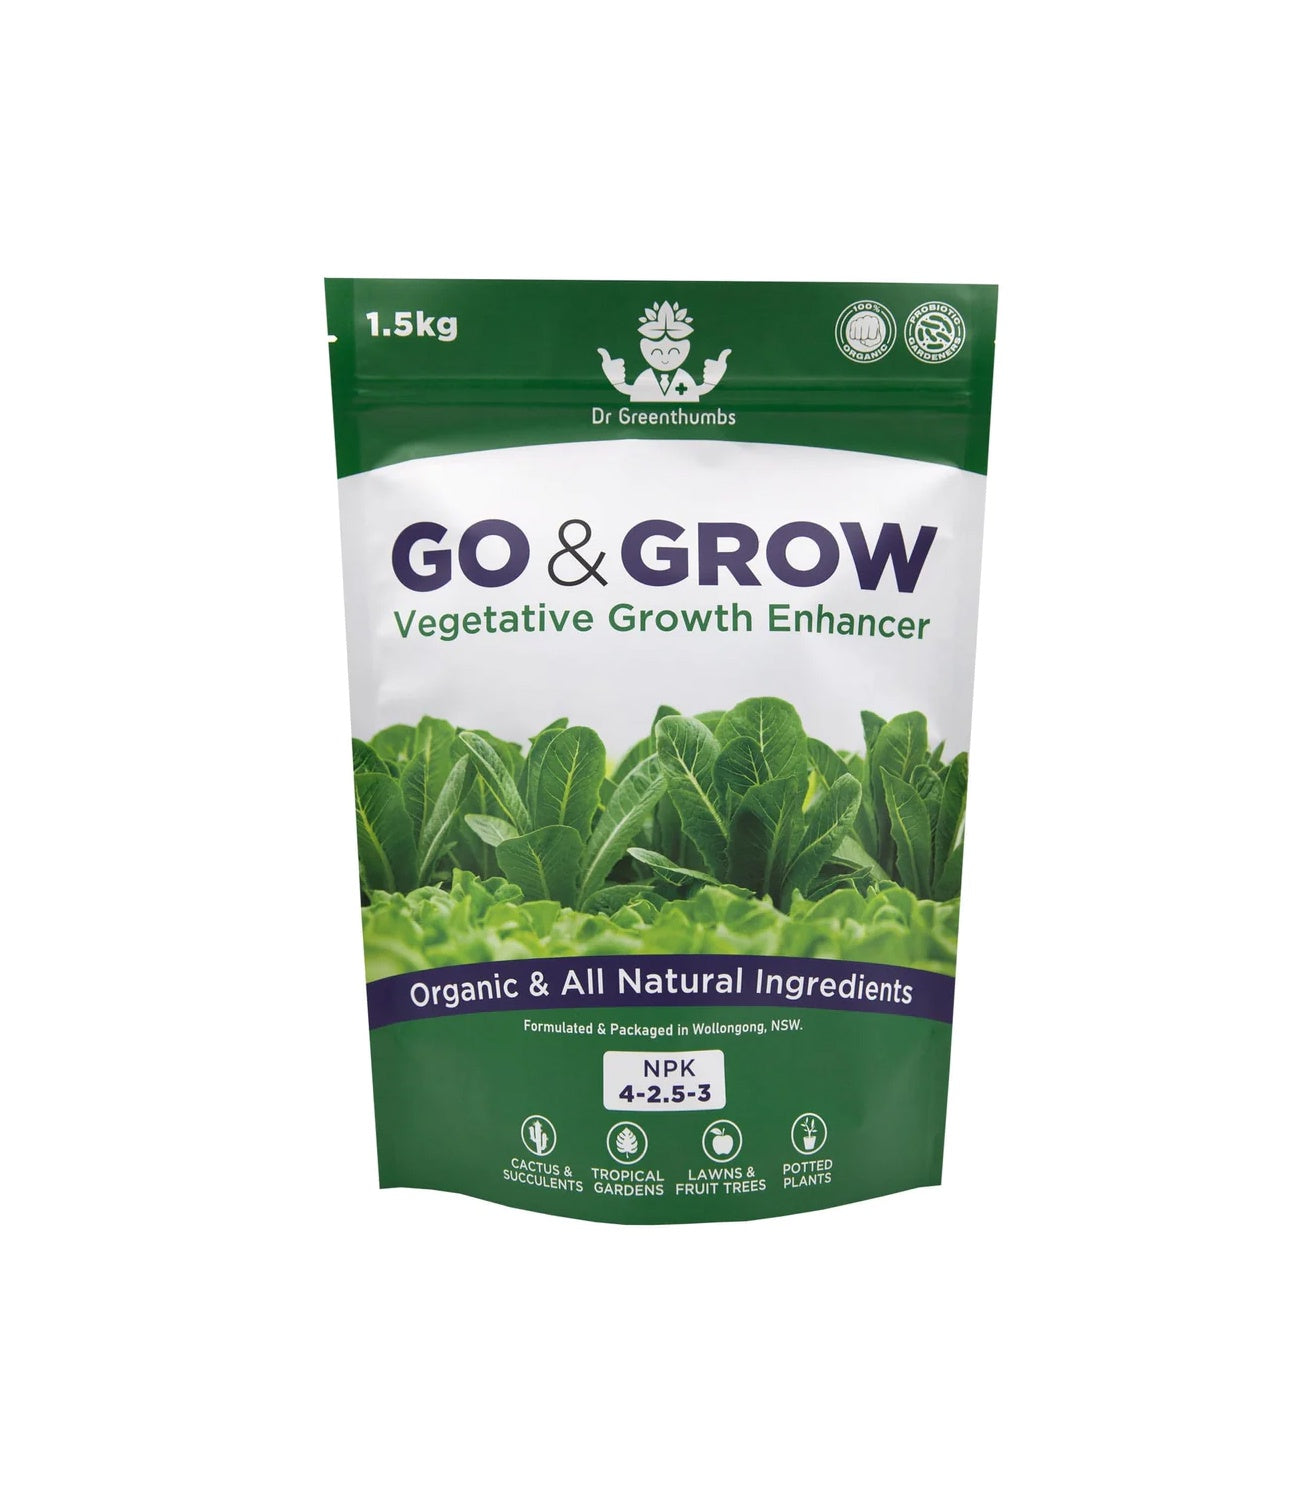 Dr Greenthumbs Go & Grow